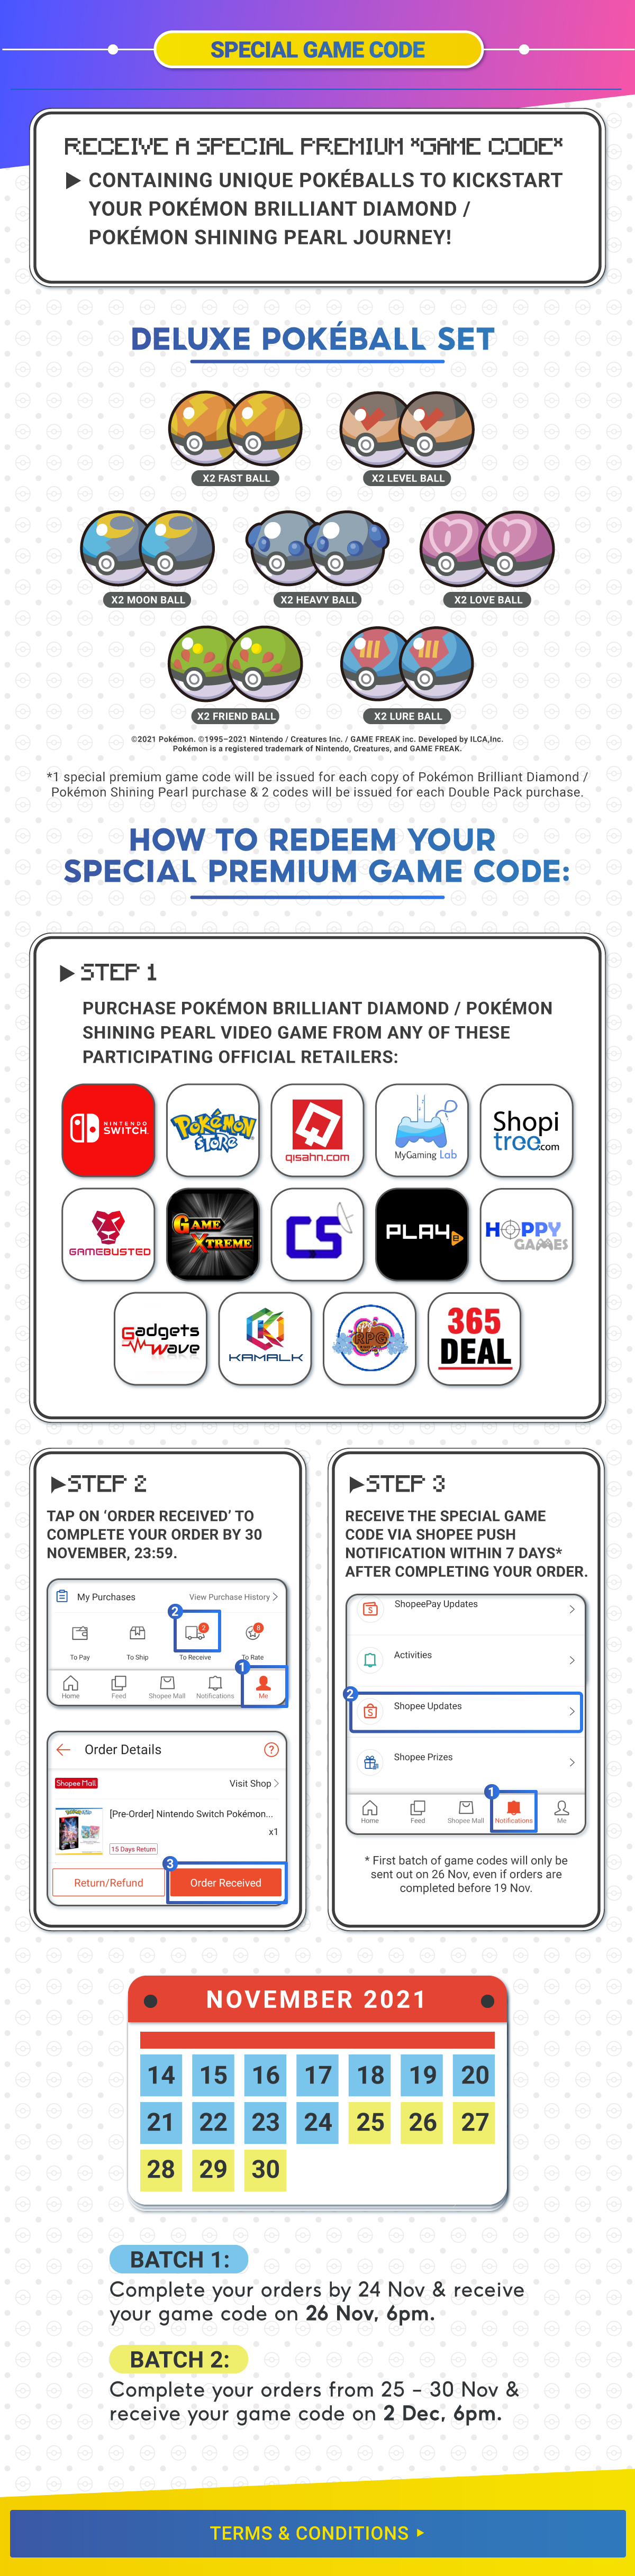 All Pokémon Brilliant Diamond & Shining Pearl Pre-Order Bonus Options and  Where to Buy Them - ComicBookWire